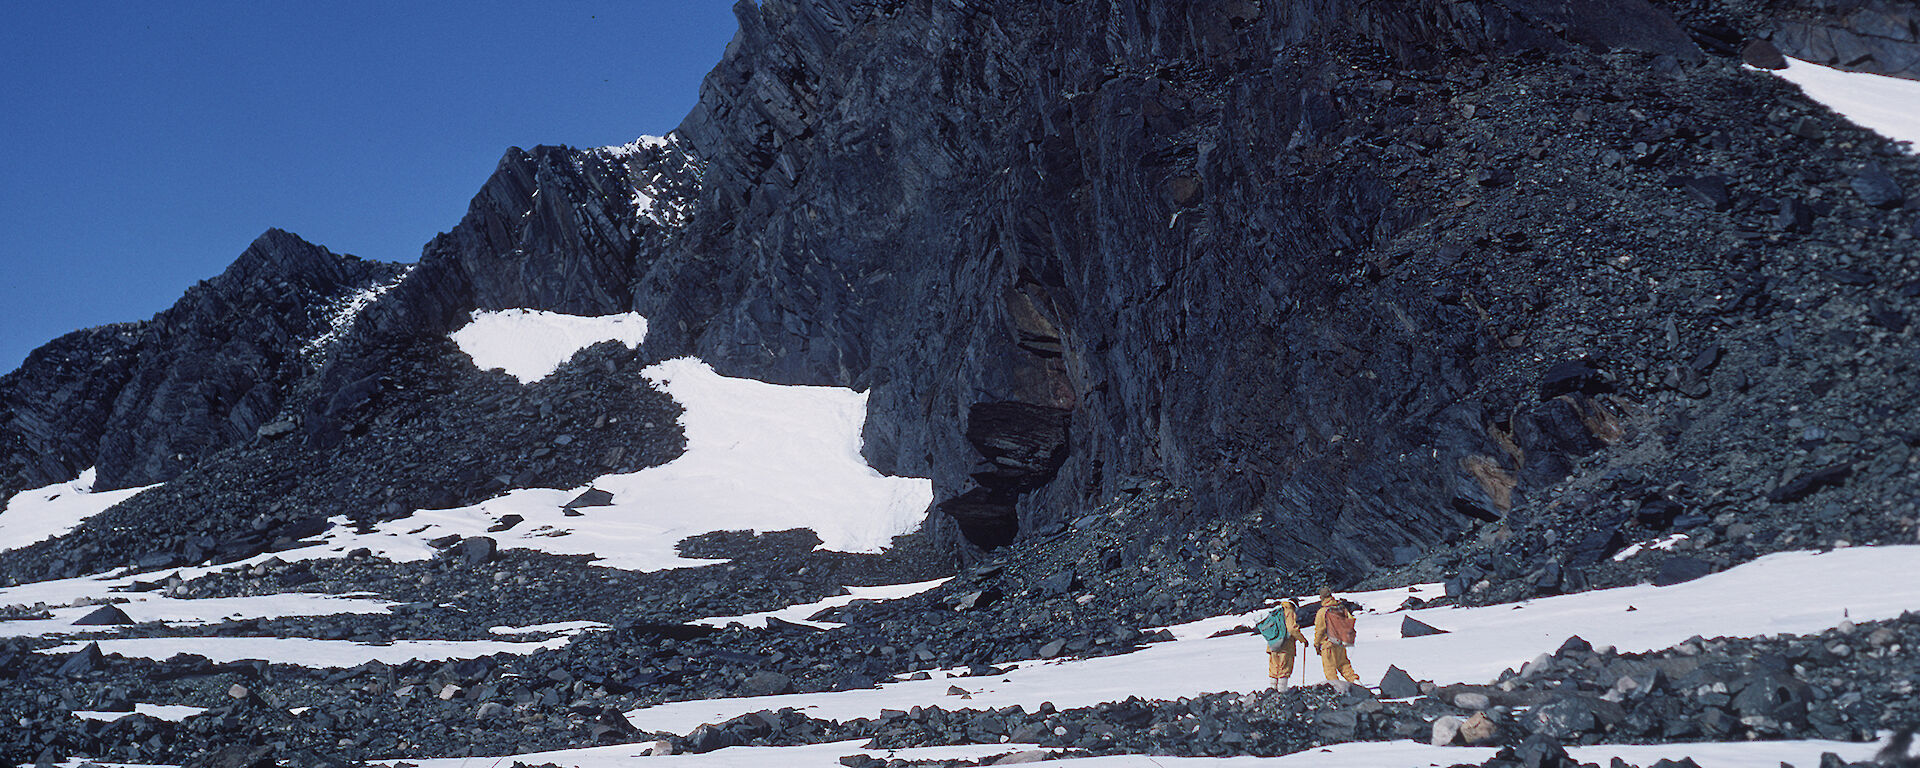 Expeditioners walk beneath a dark rocky outcrop.